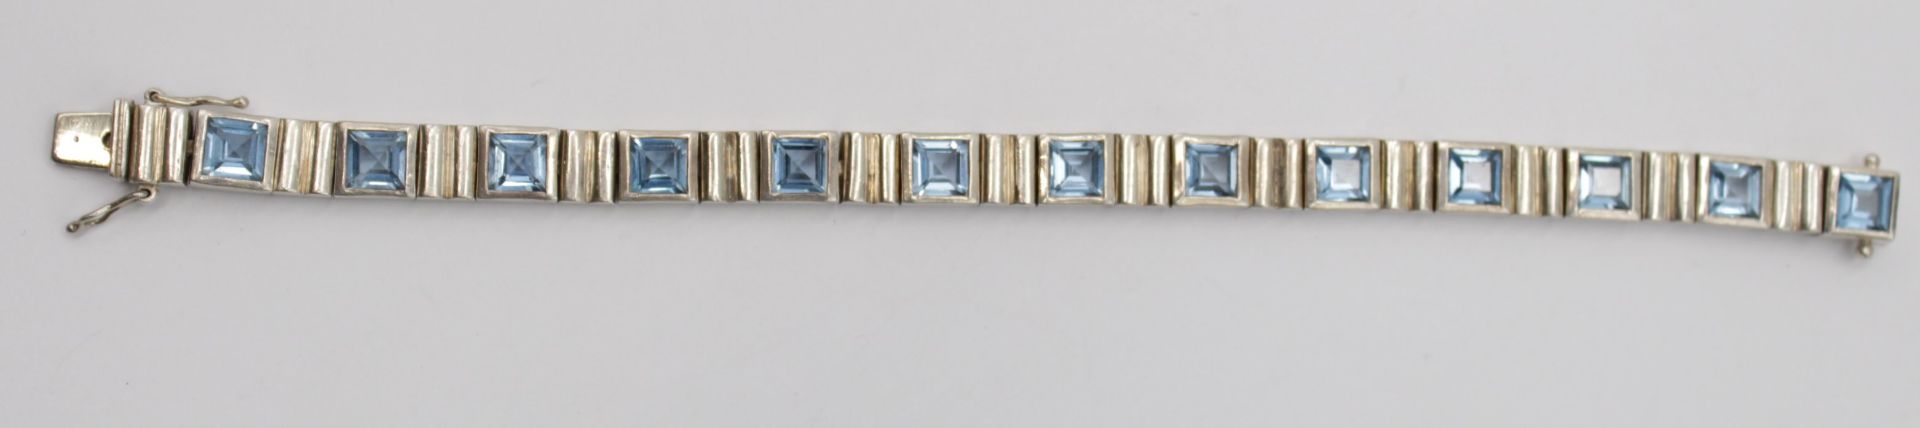 Armband, 925er Silber, hellblaue Steine (Aquamarine?), ca. 35,7gr., L-20cm. - Image 2 of 4